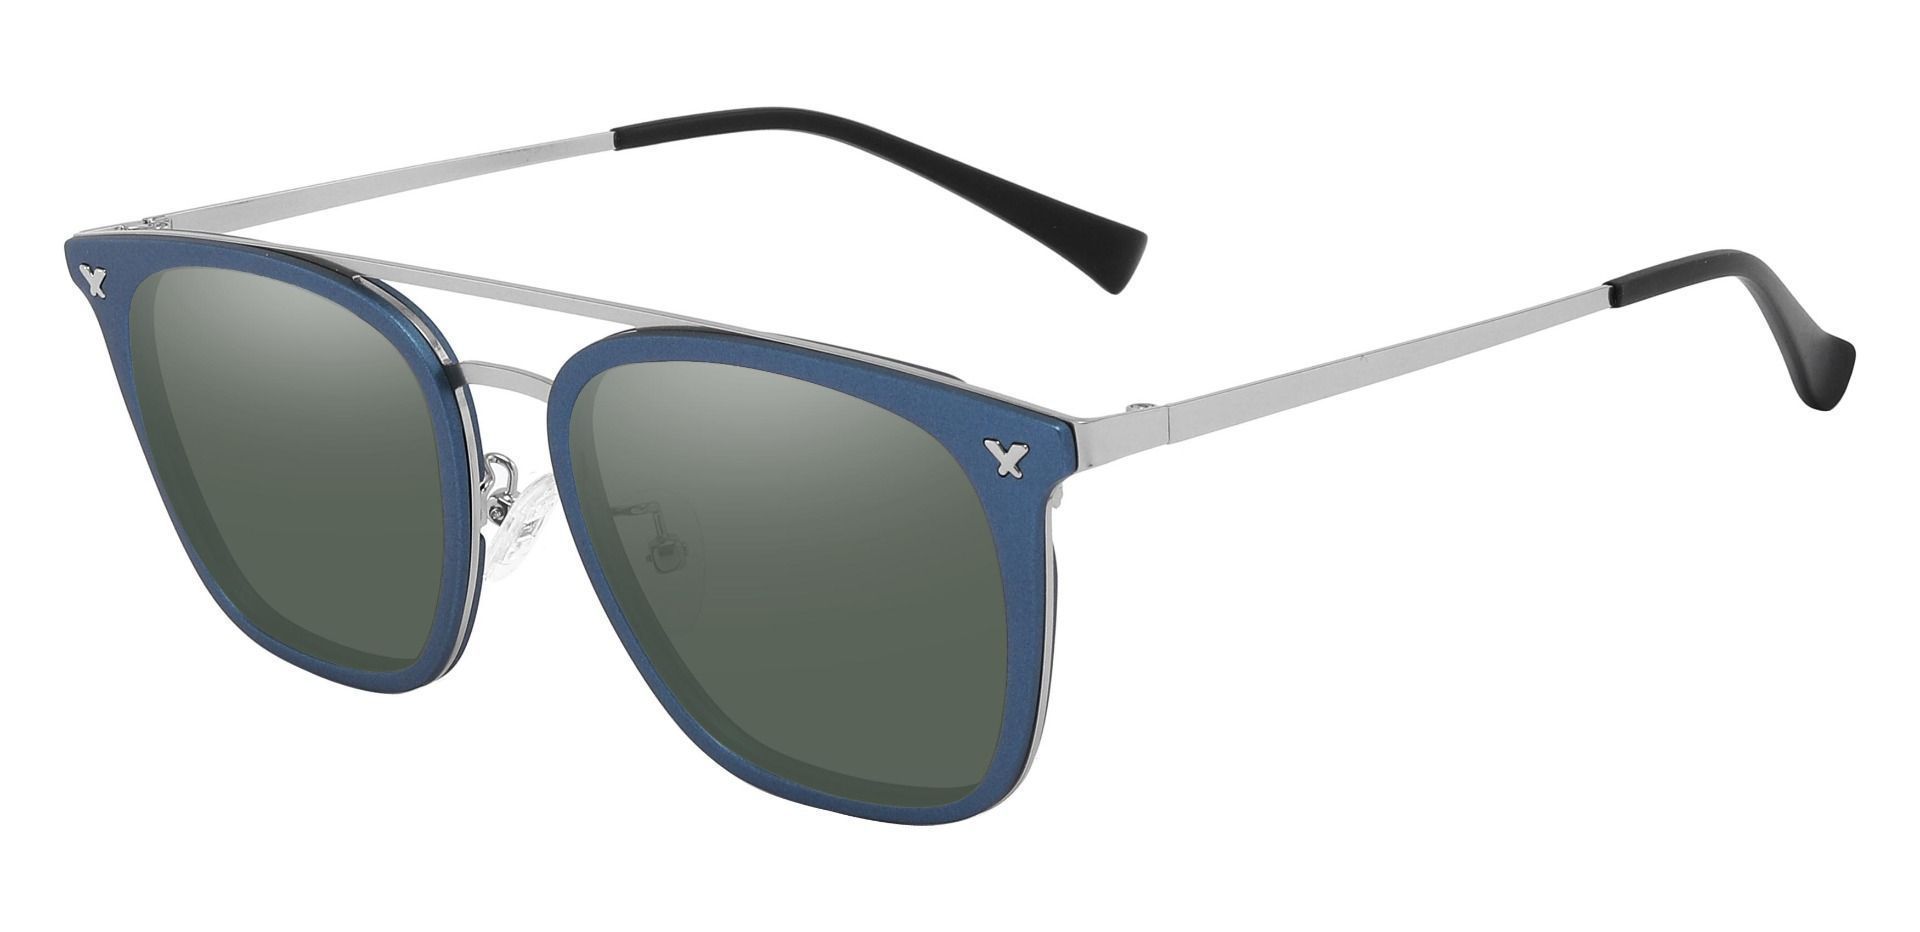 Francois Aviator Prescription Sunglasses - Blue Frame With Green Lenses